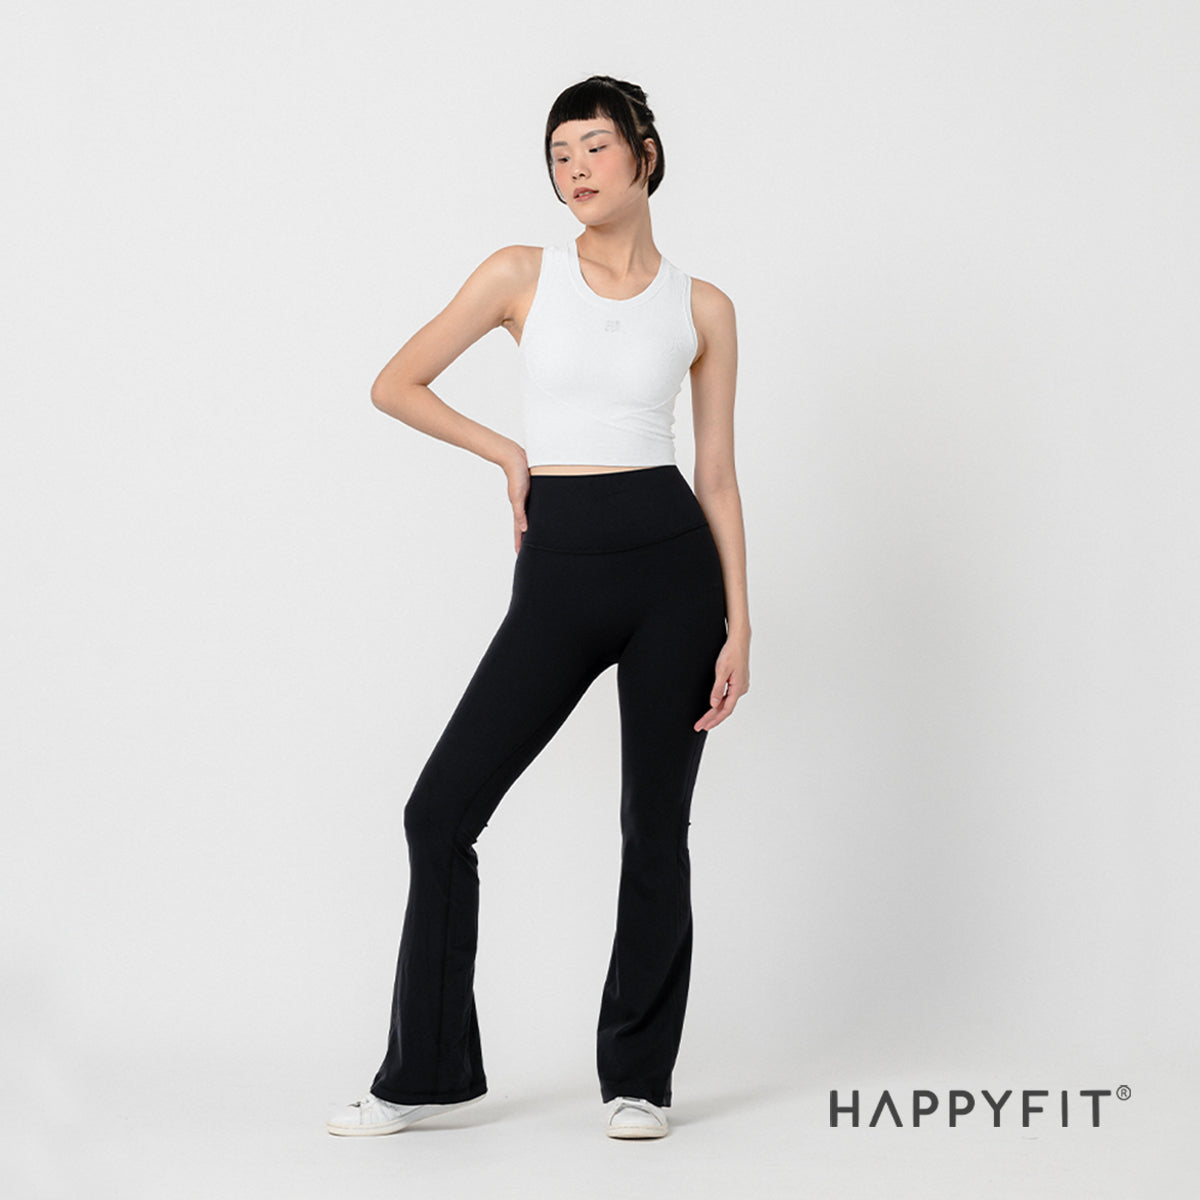 HAPPYFIT Flare Free Size Yoga Pants